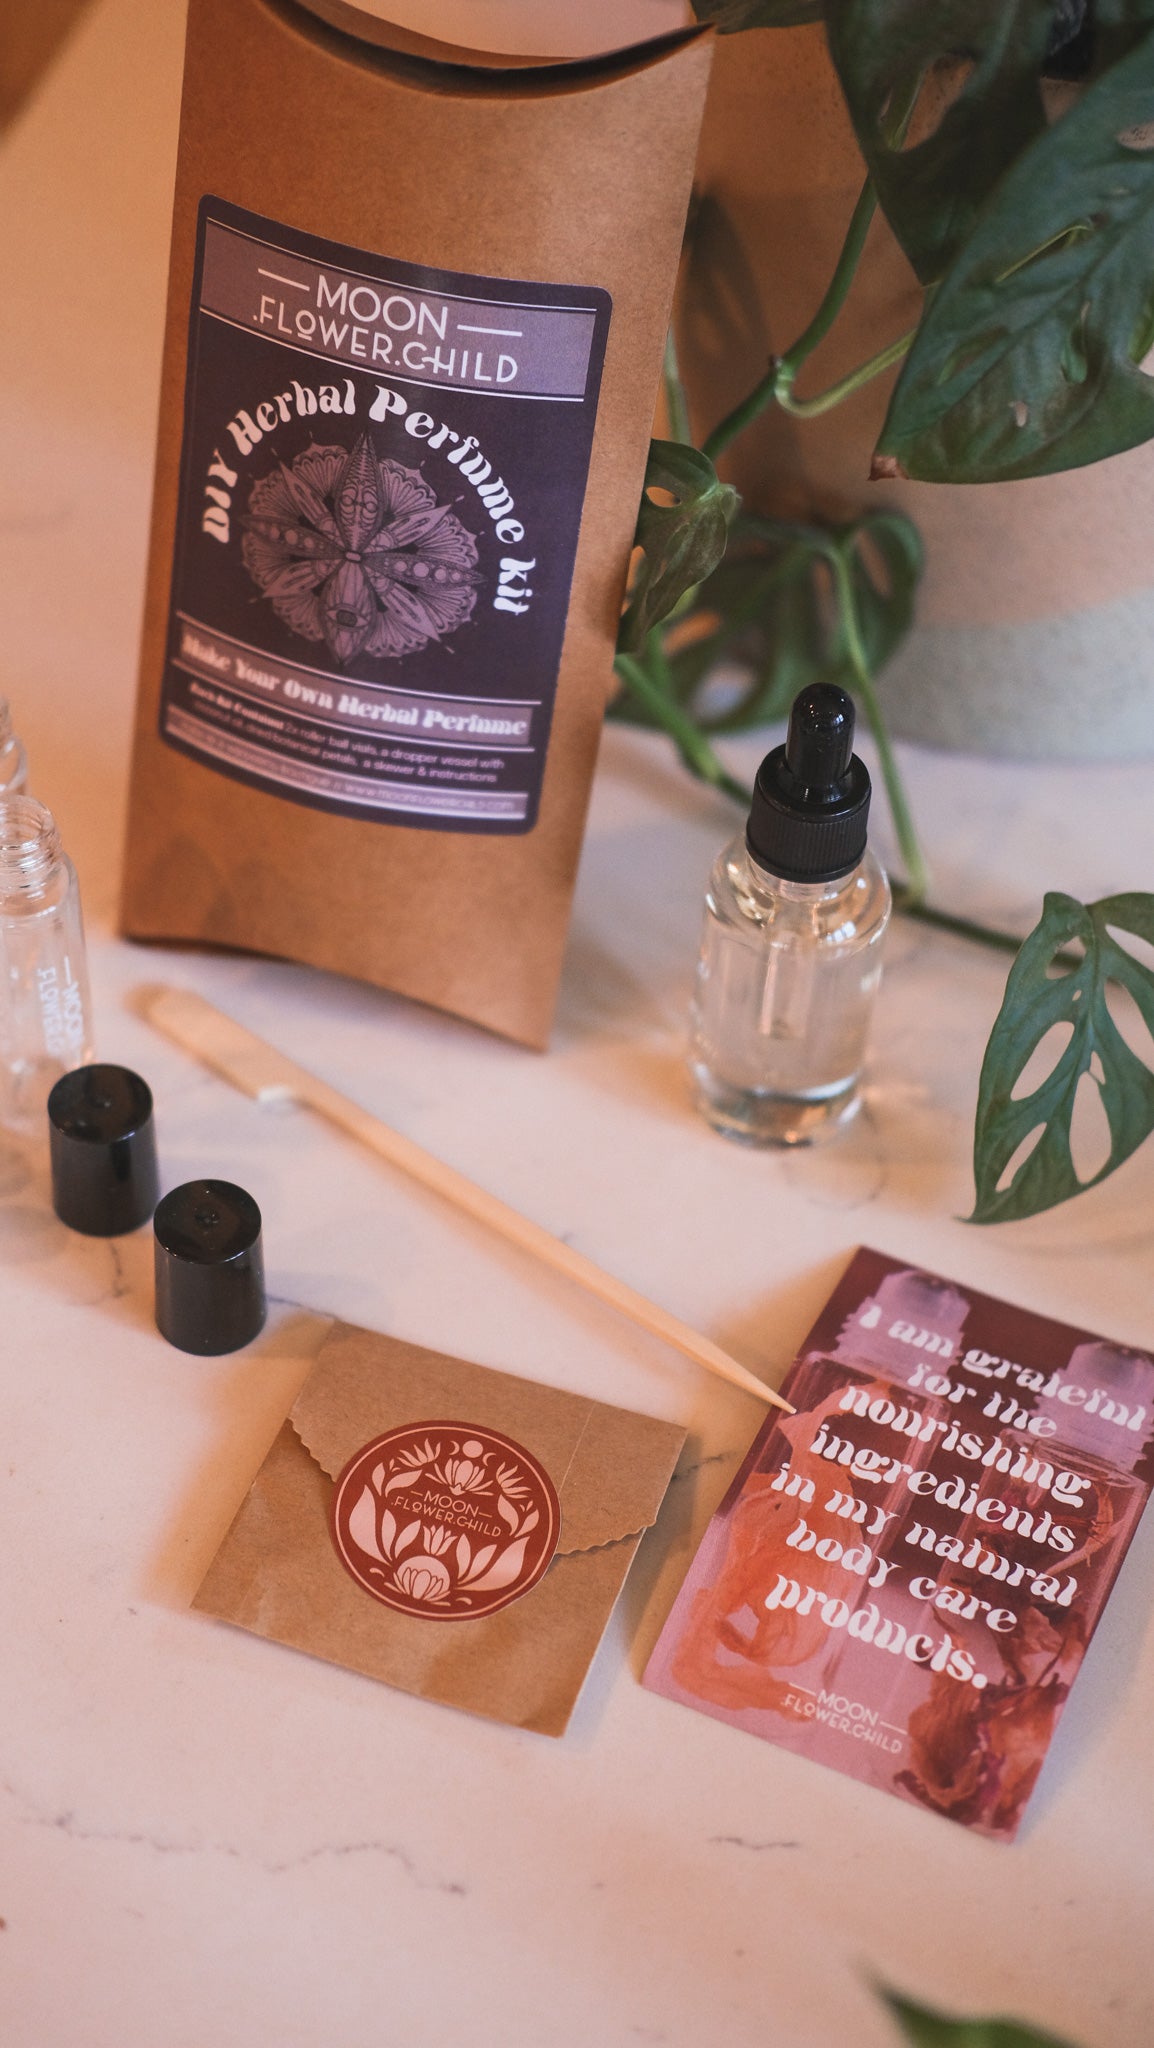 DIY Herbal Perfume Kit